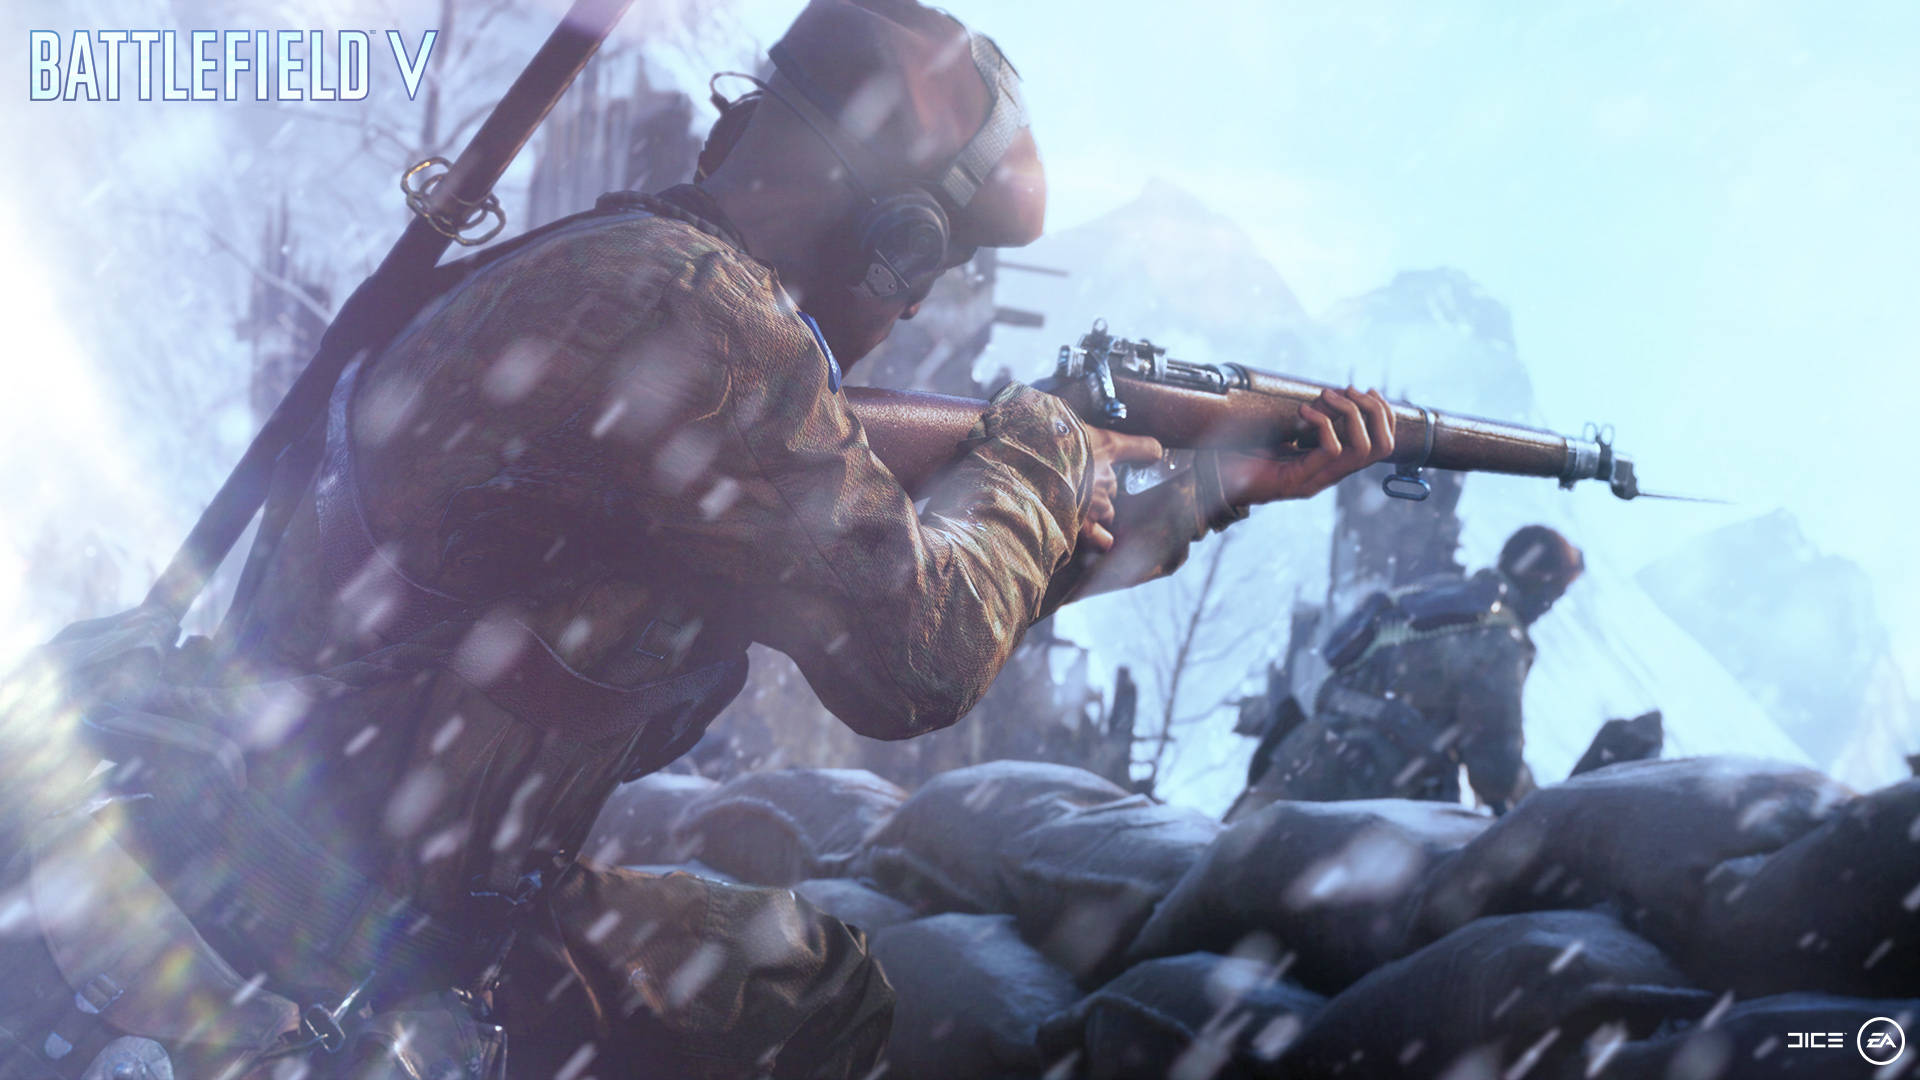 Battlefield 5 Soldiers In Snow Background